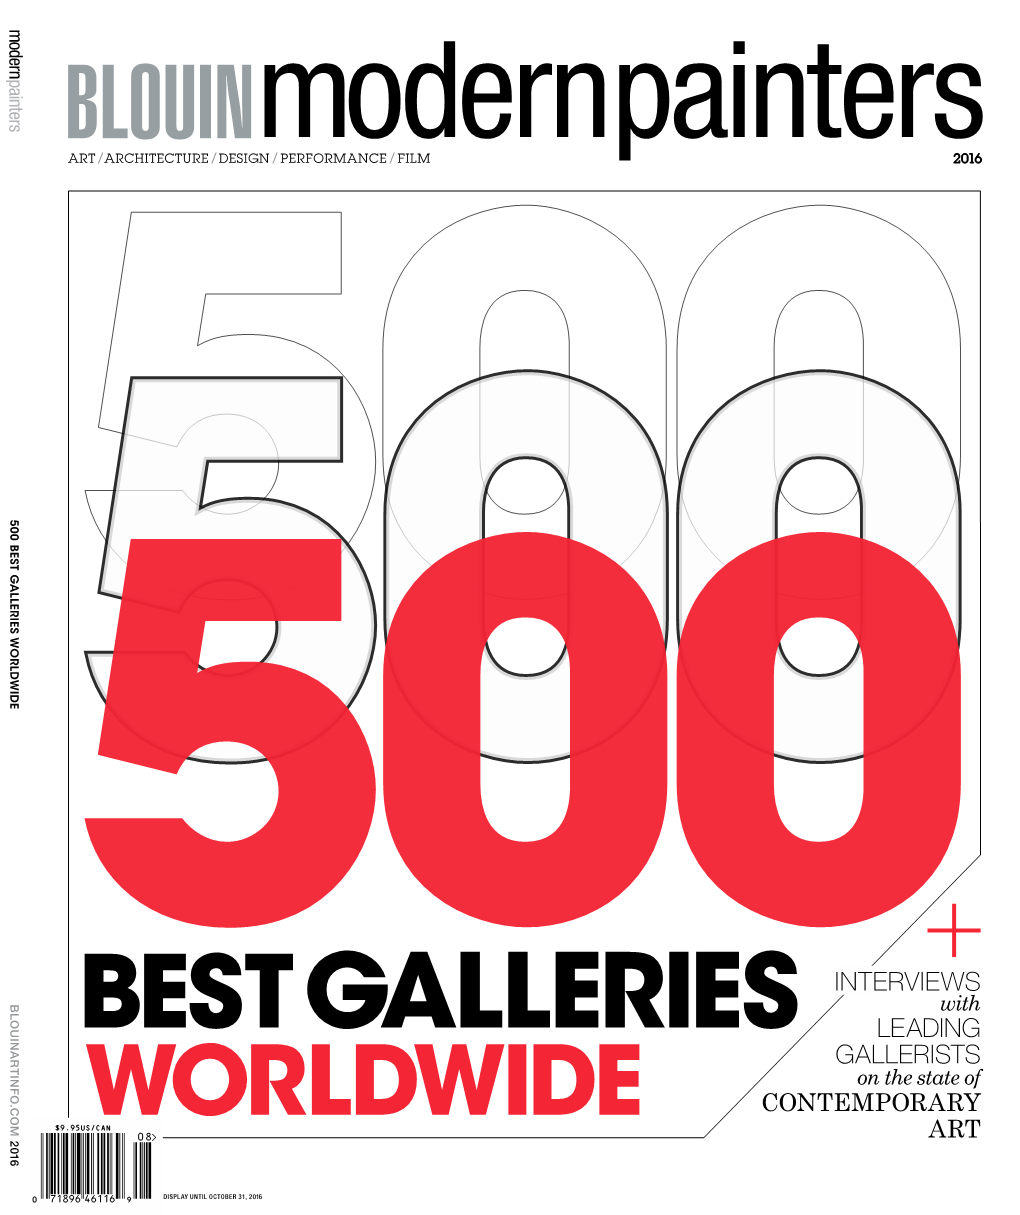 500Interviews Leading Gallerists